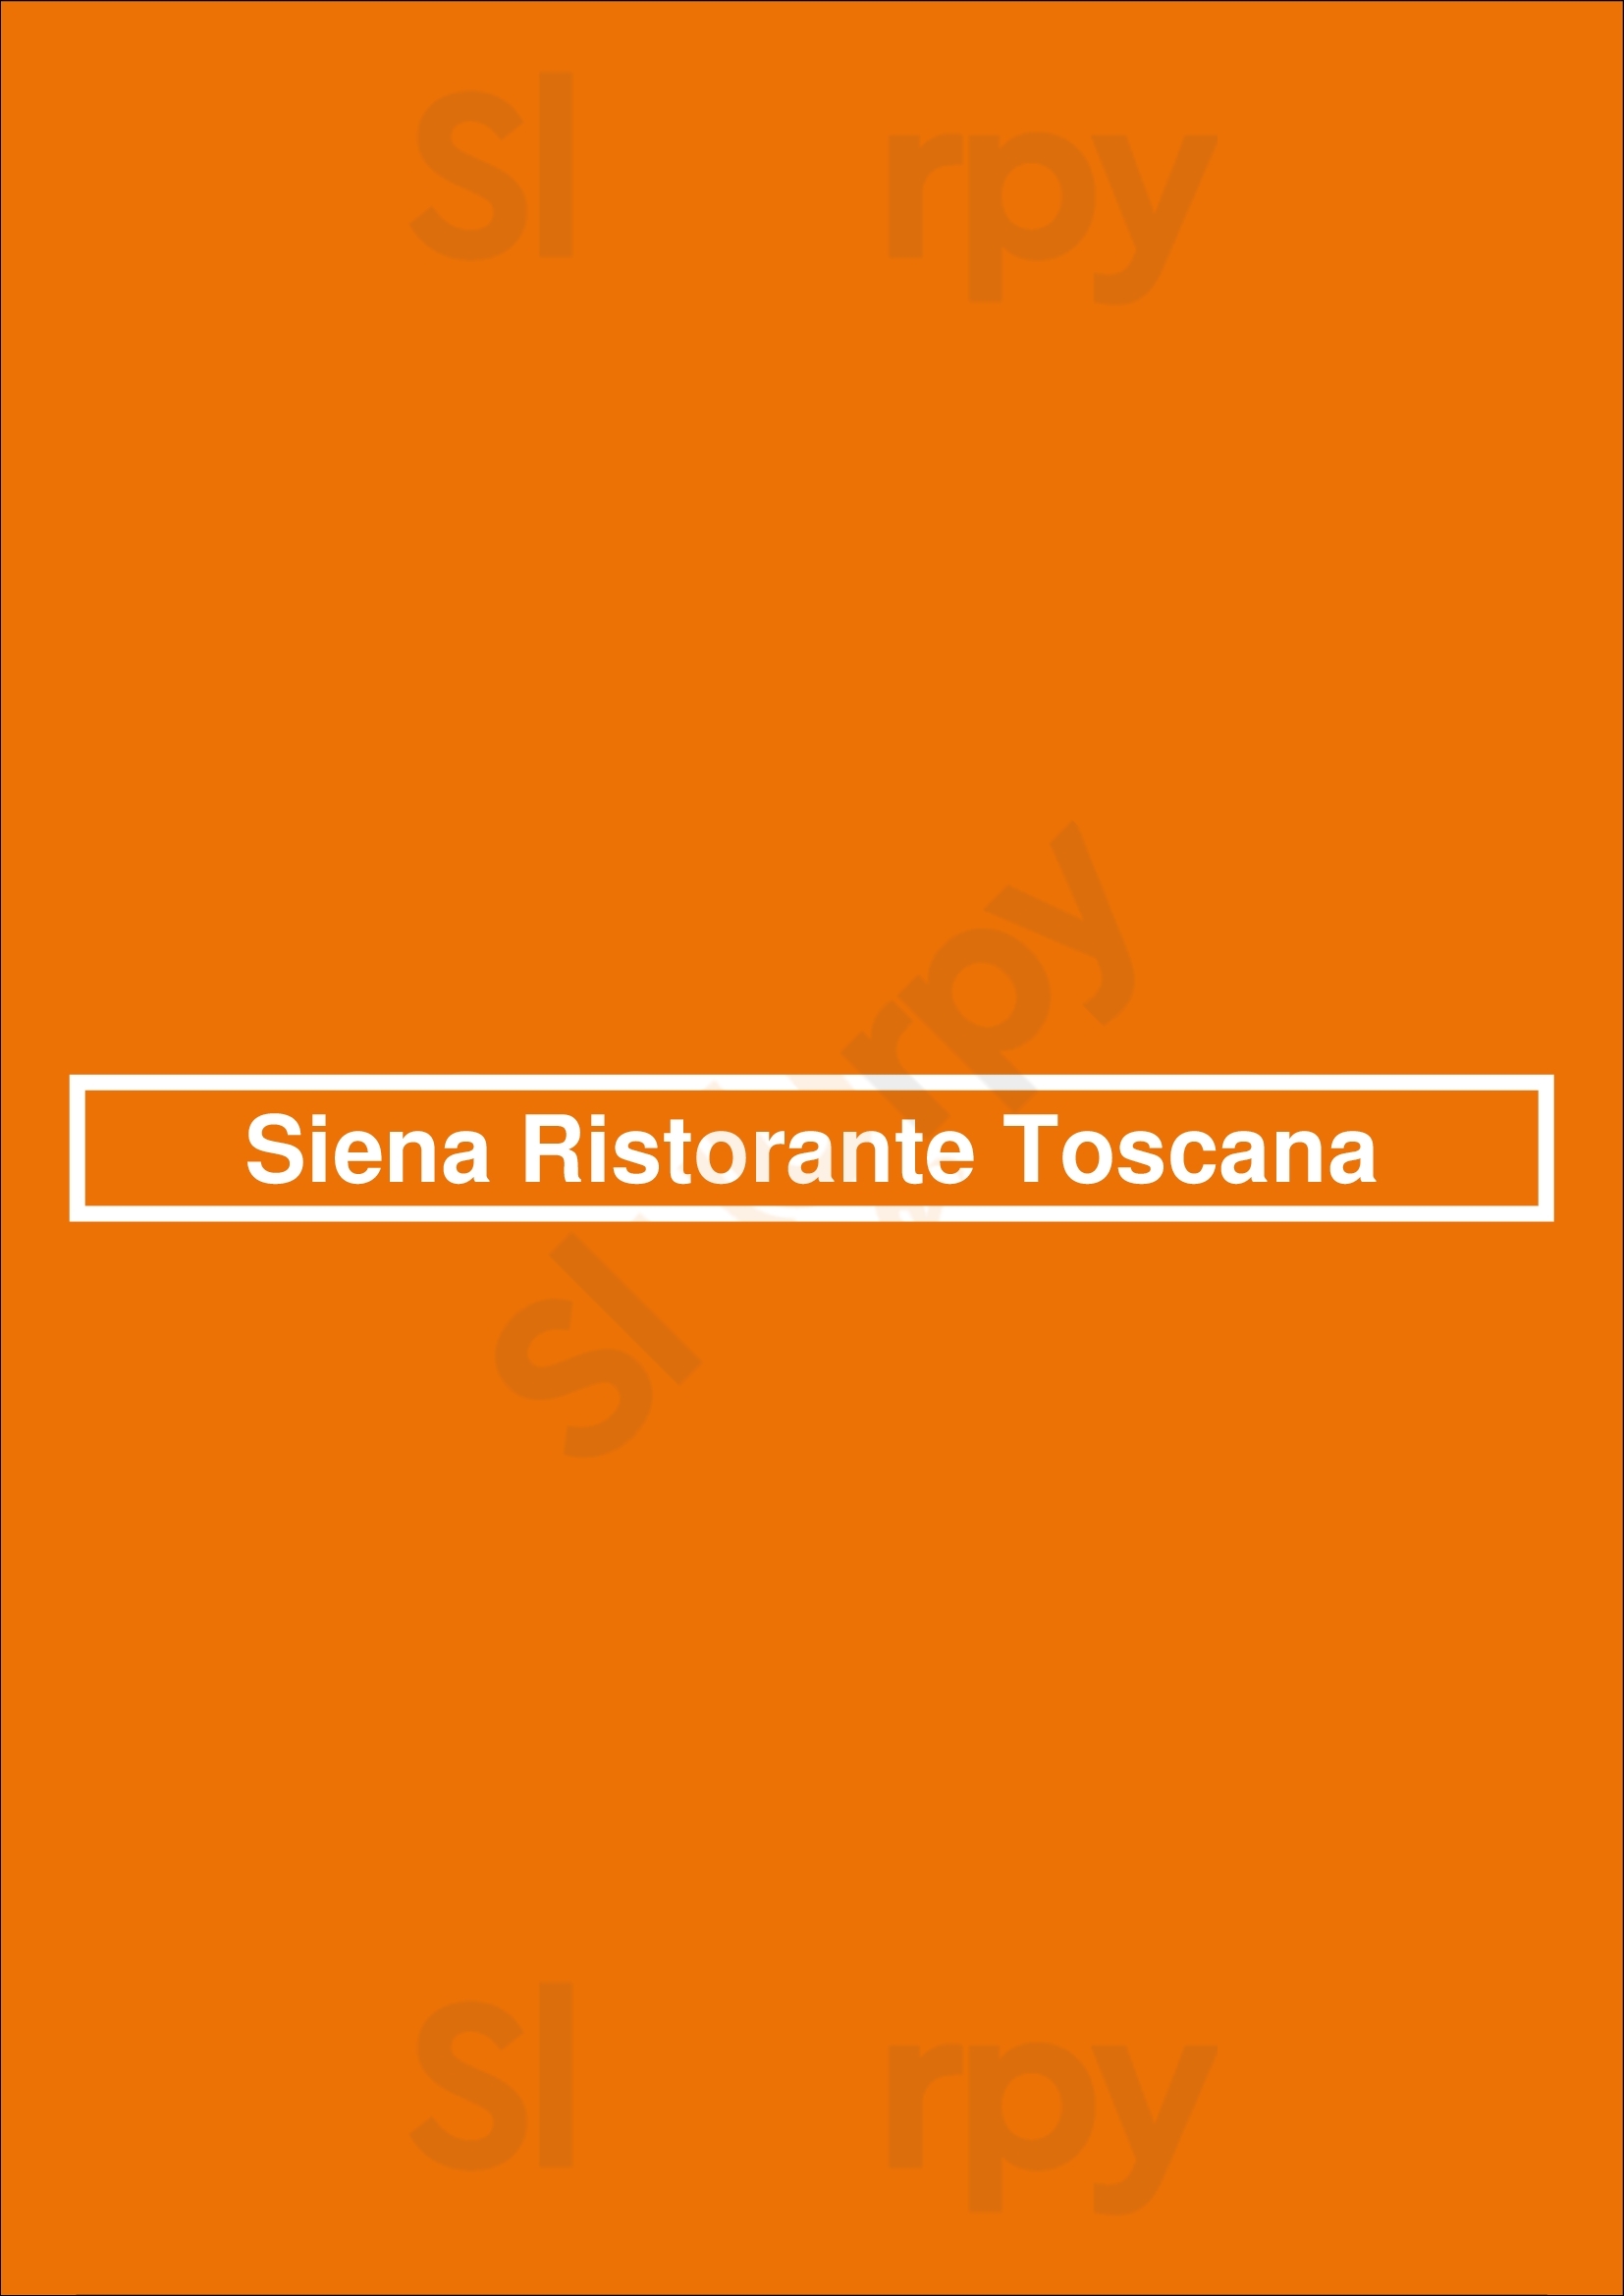 Siena Ristorante Toscana Austin Menu - 1